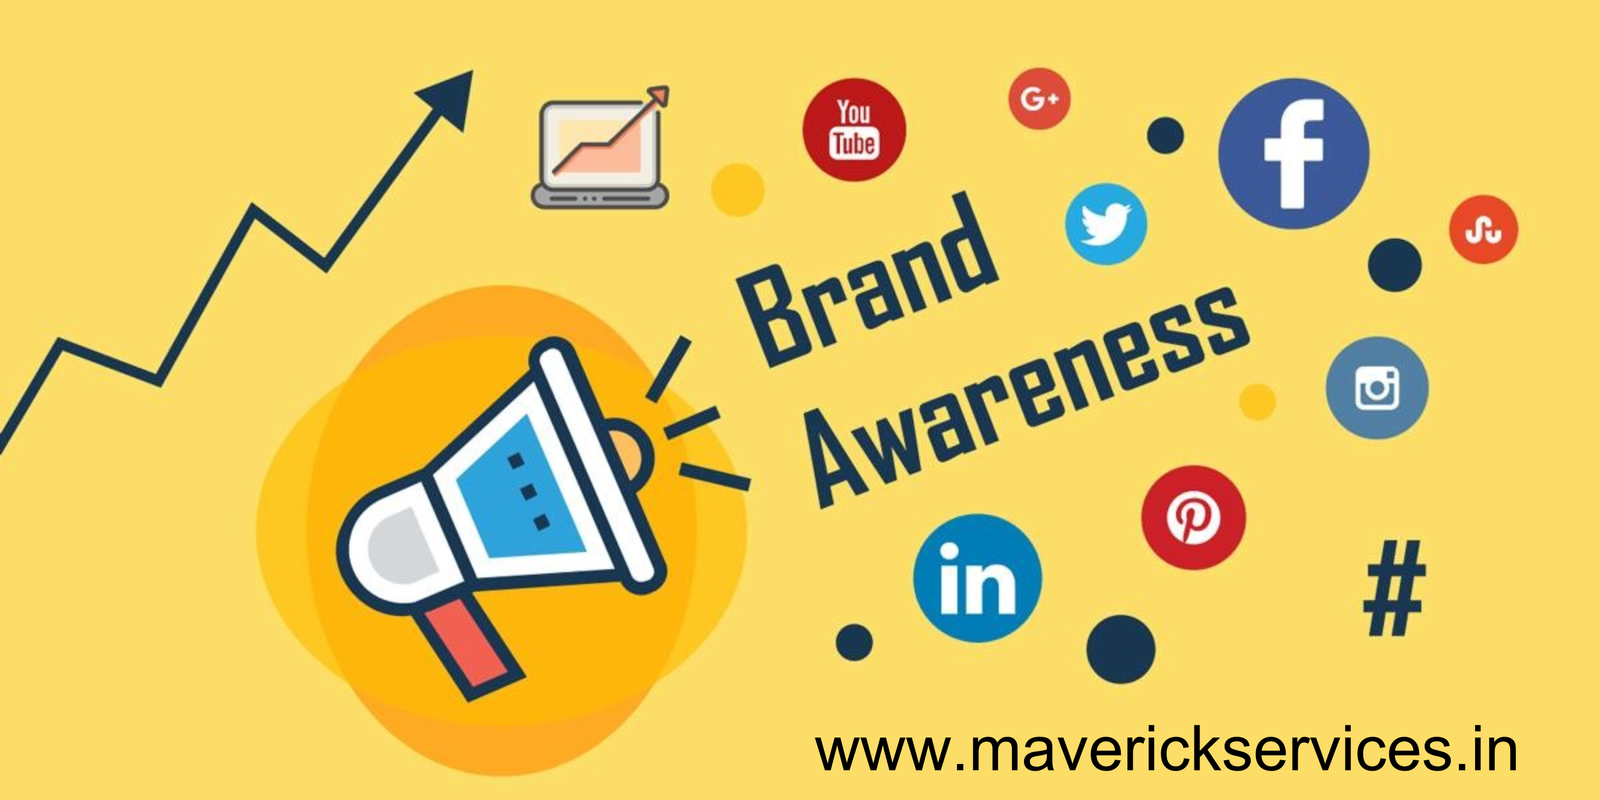 How to Create Brand Awareness on Social Media